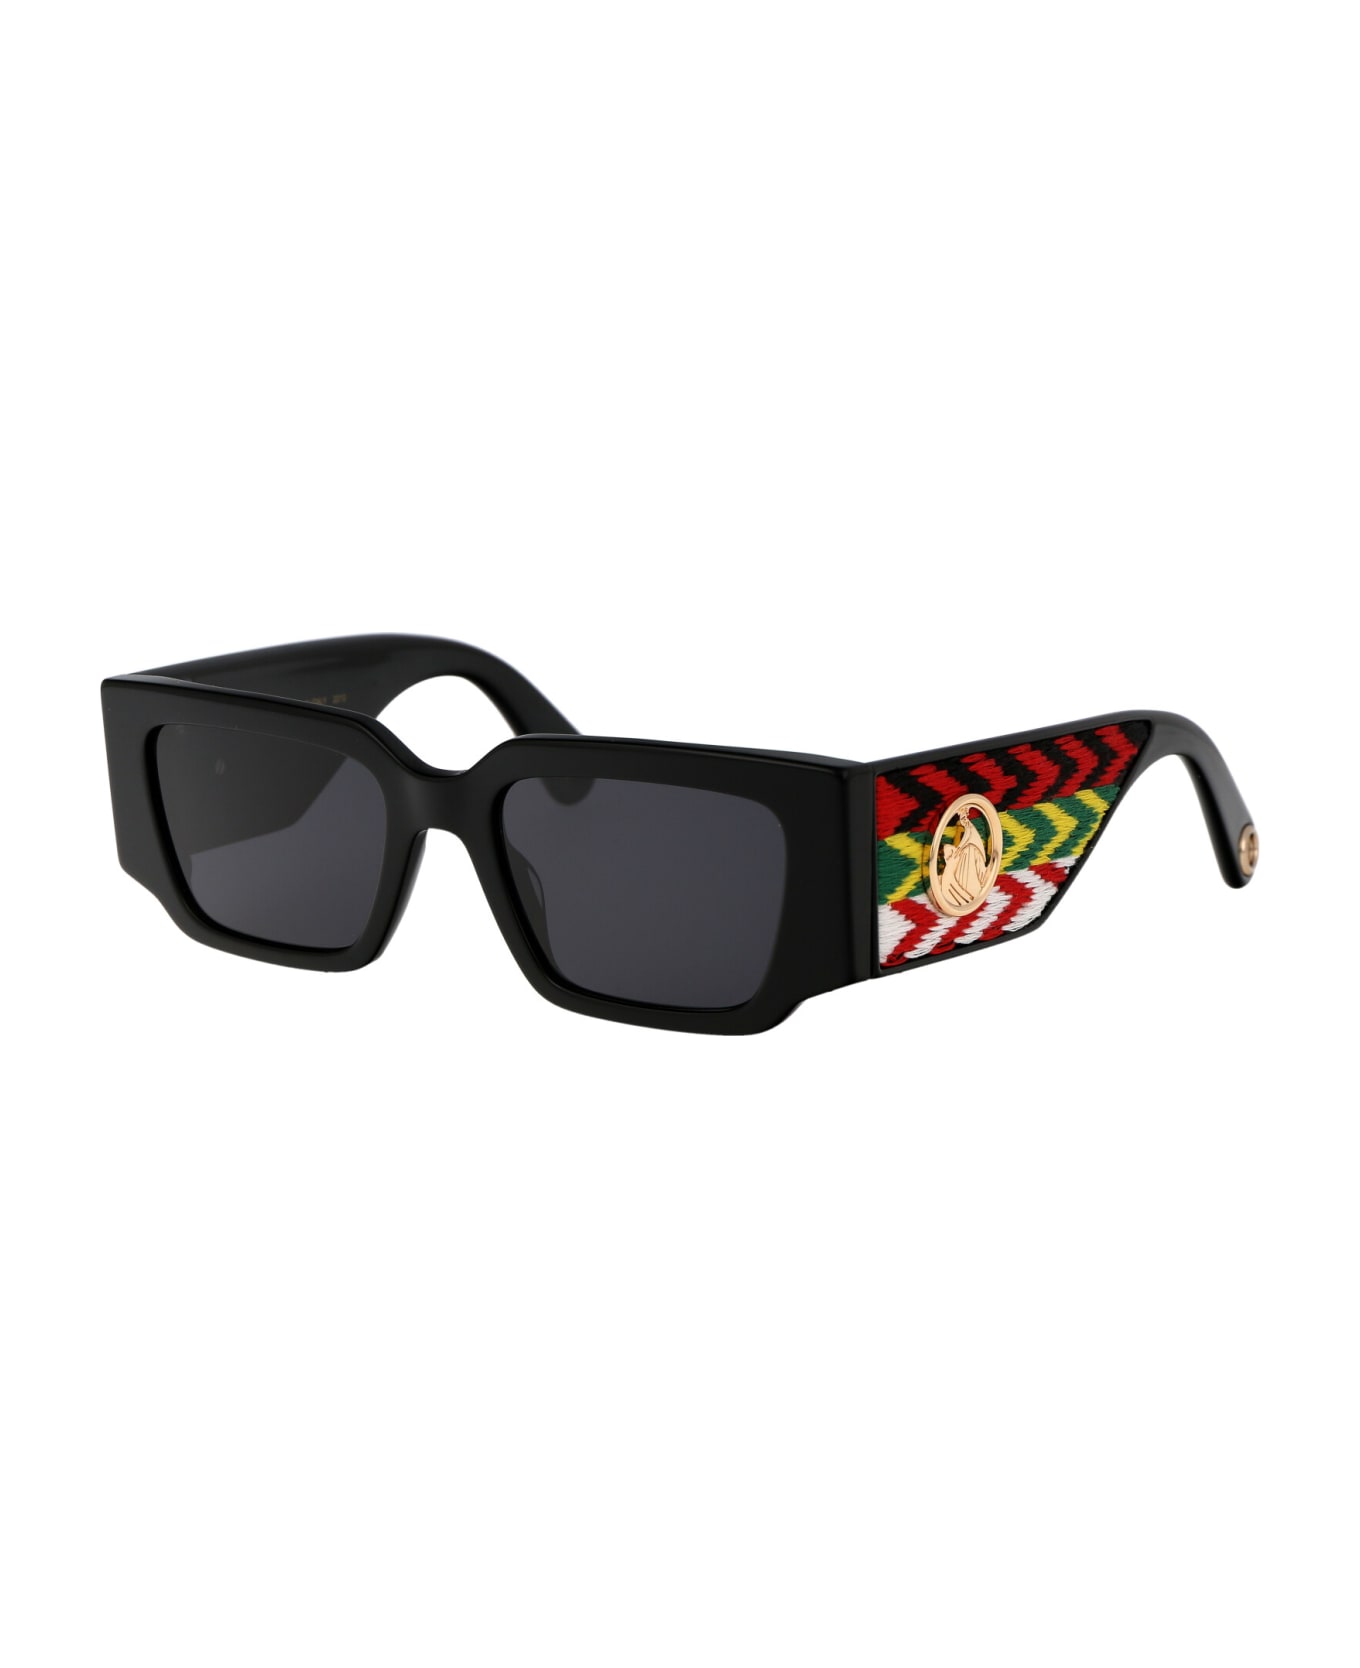 Lanvin Lnv639s Sunglasses - 001 BLACK サングラス